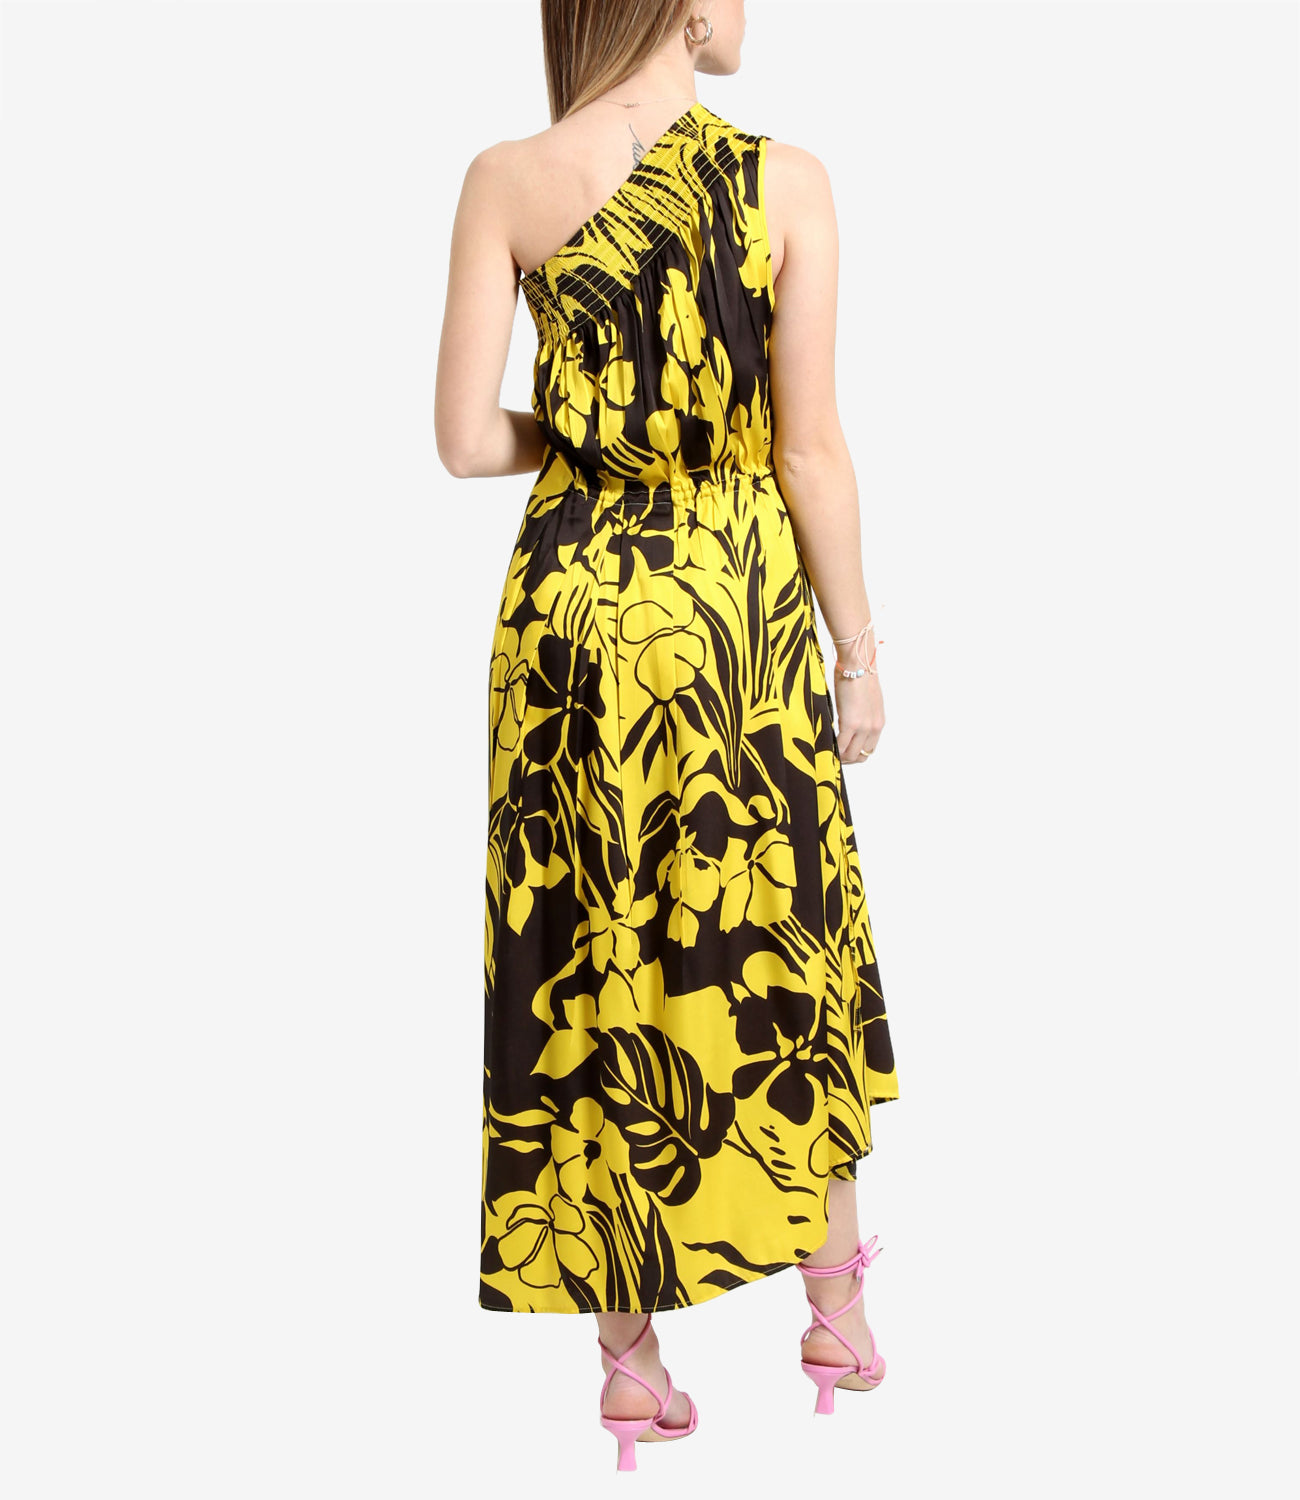 N 21 | Yellow and Black Dress